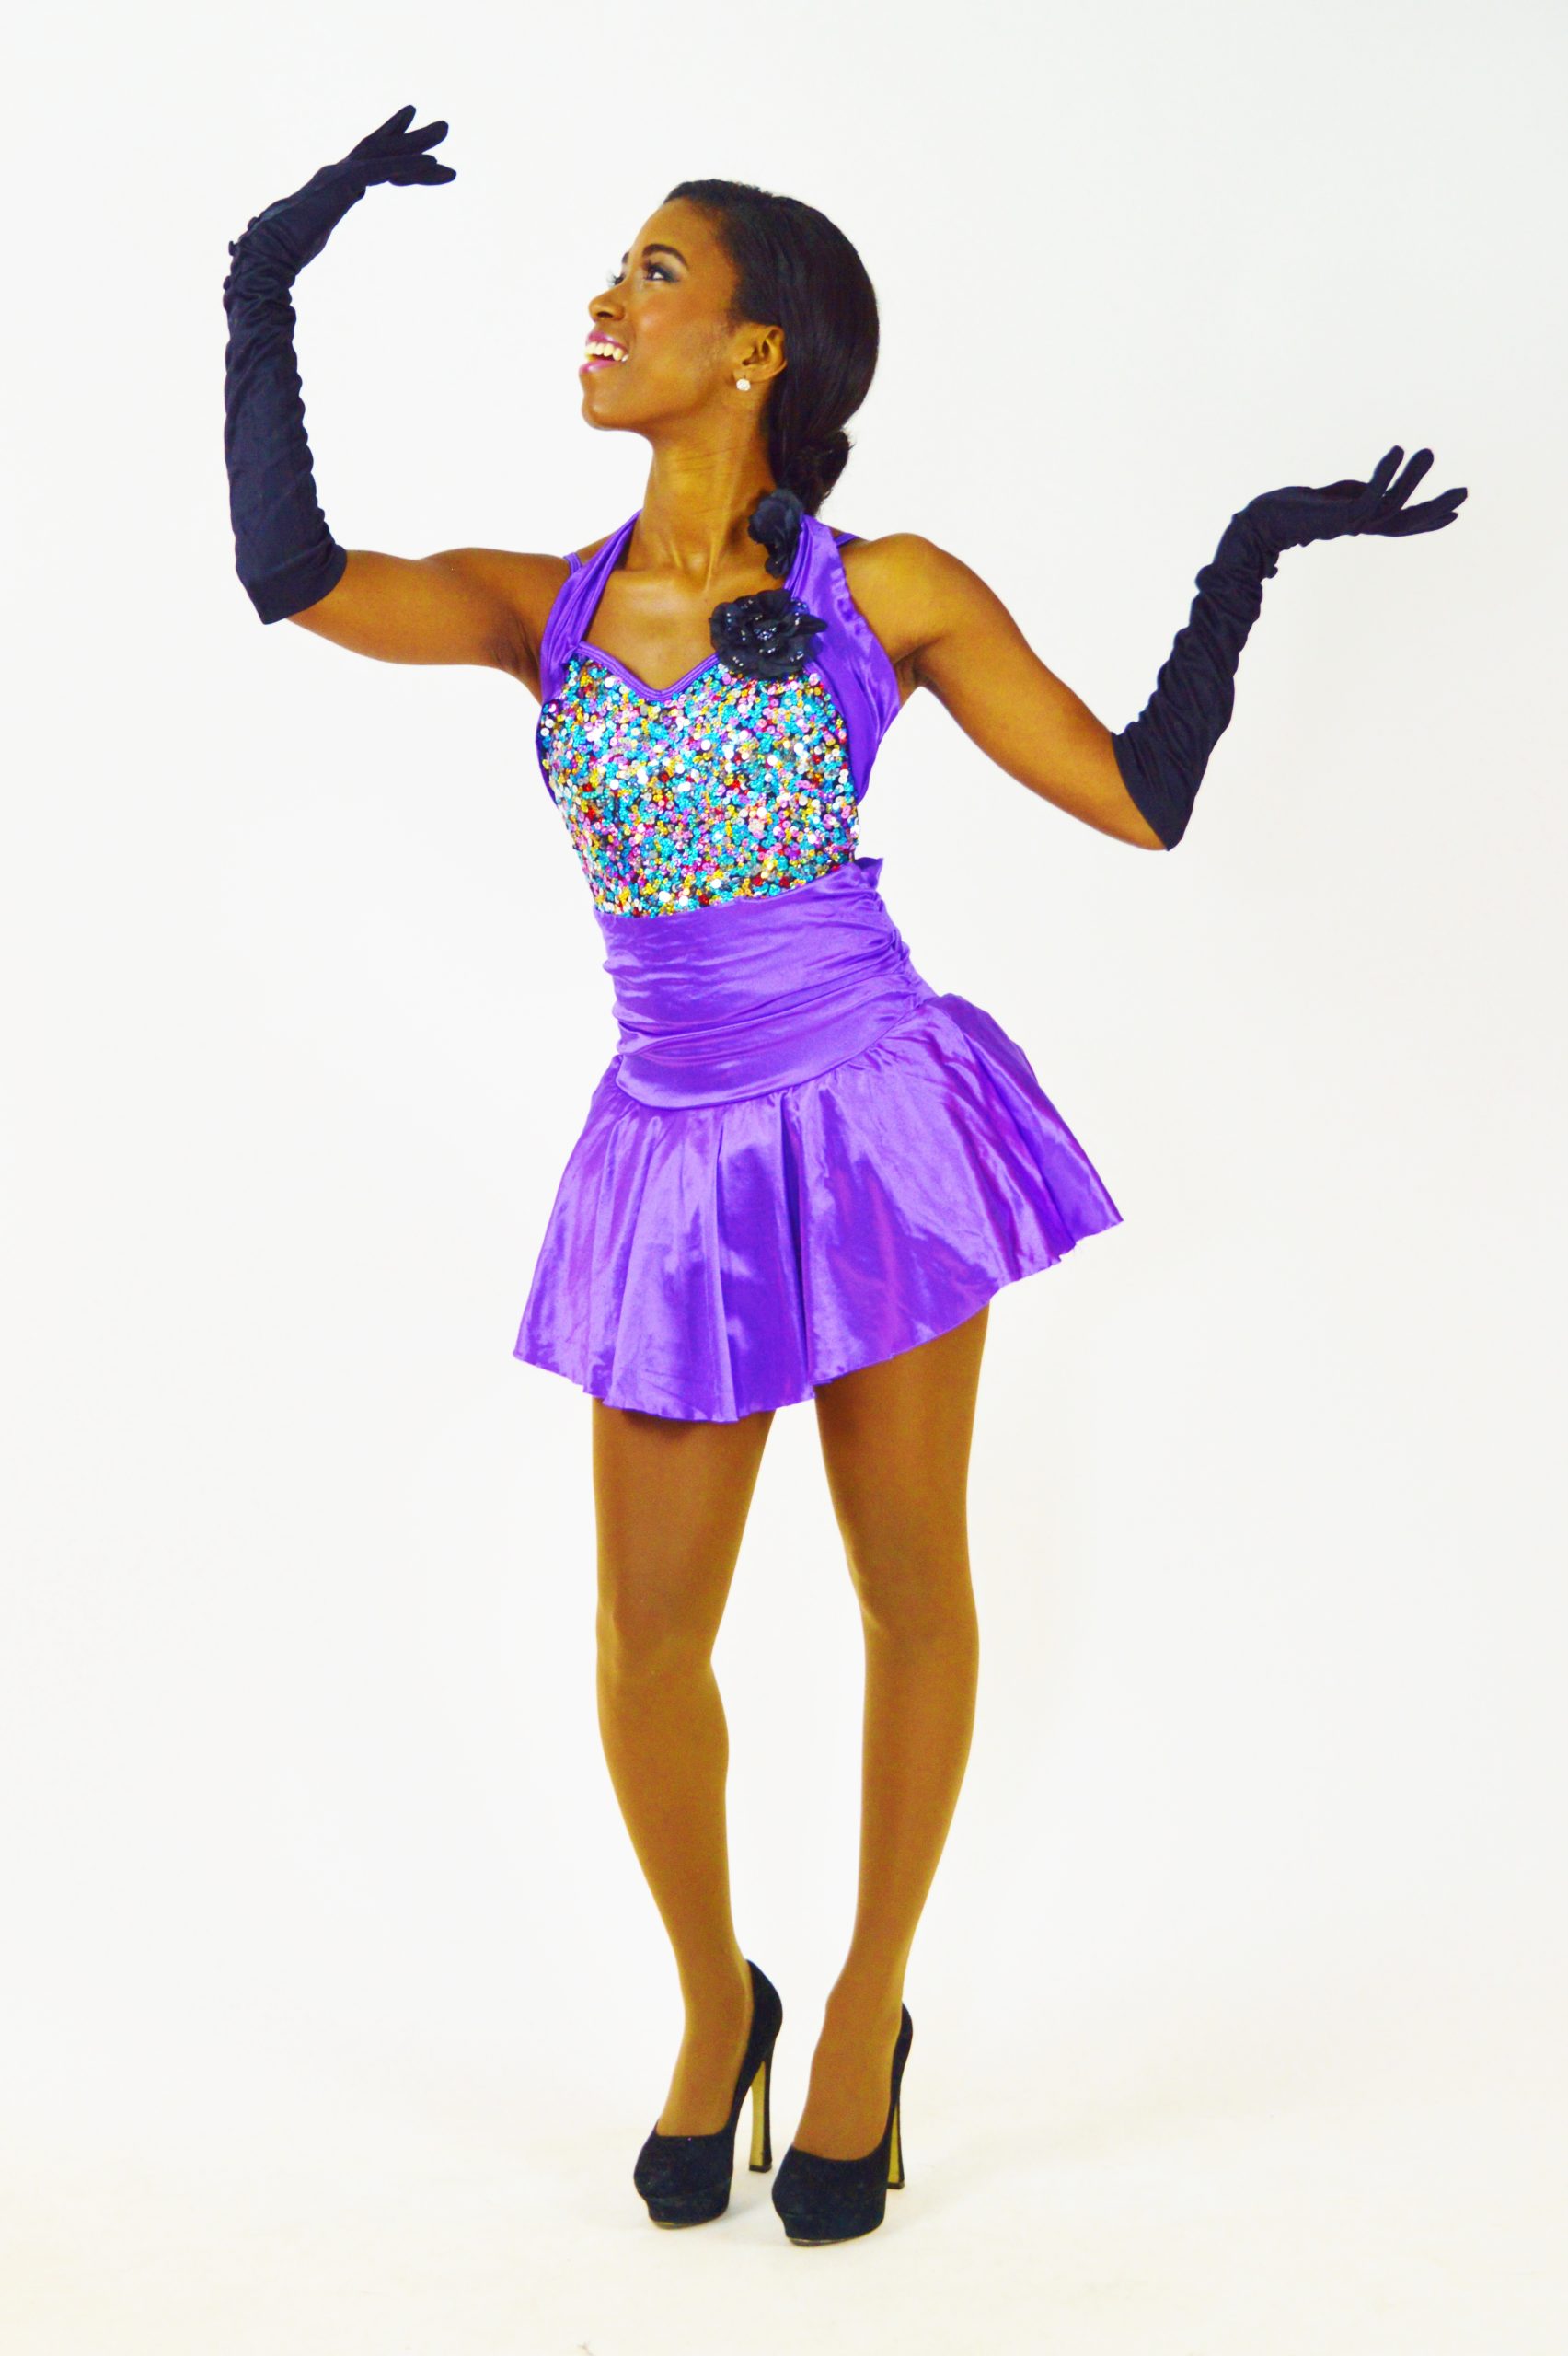 purple halter dress